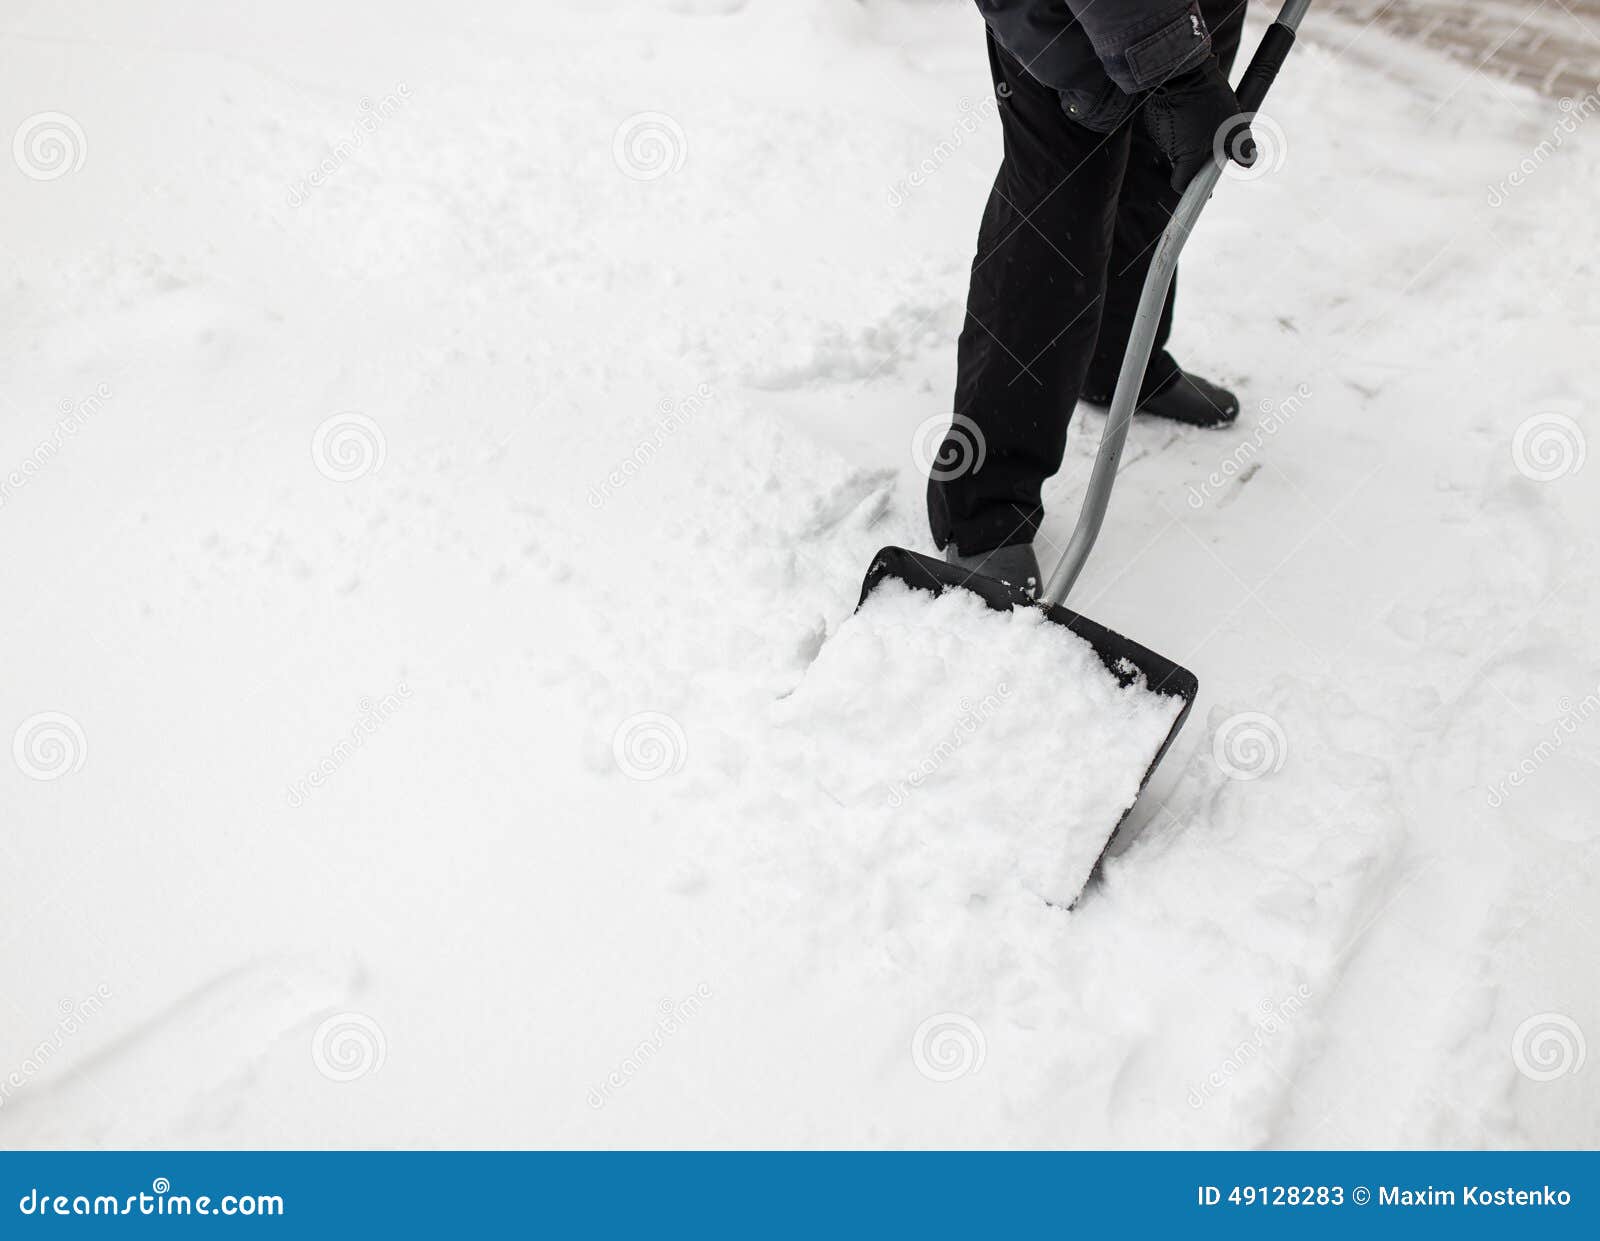 man with snow shovel cleans sidewalks